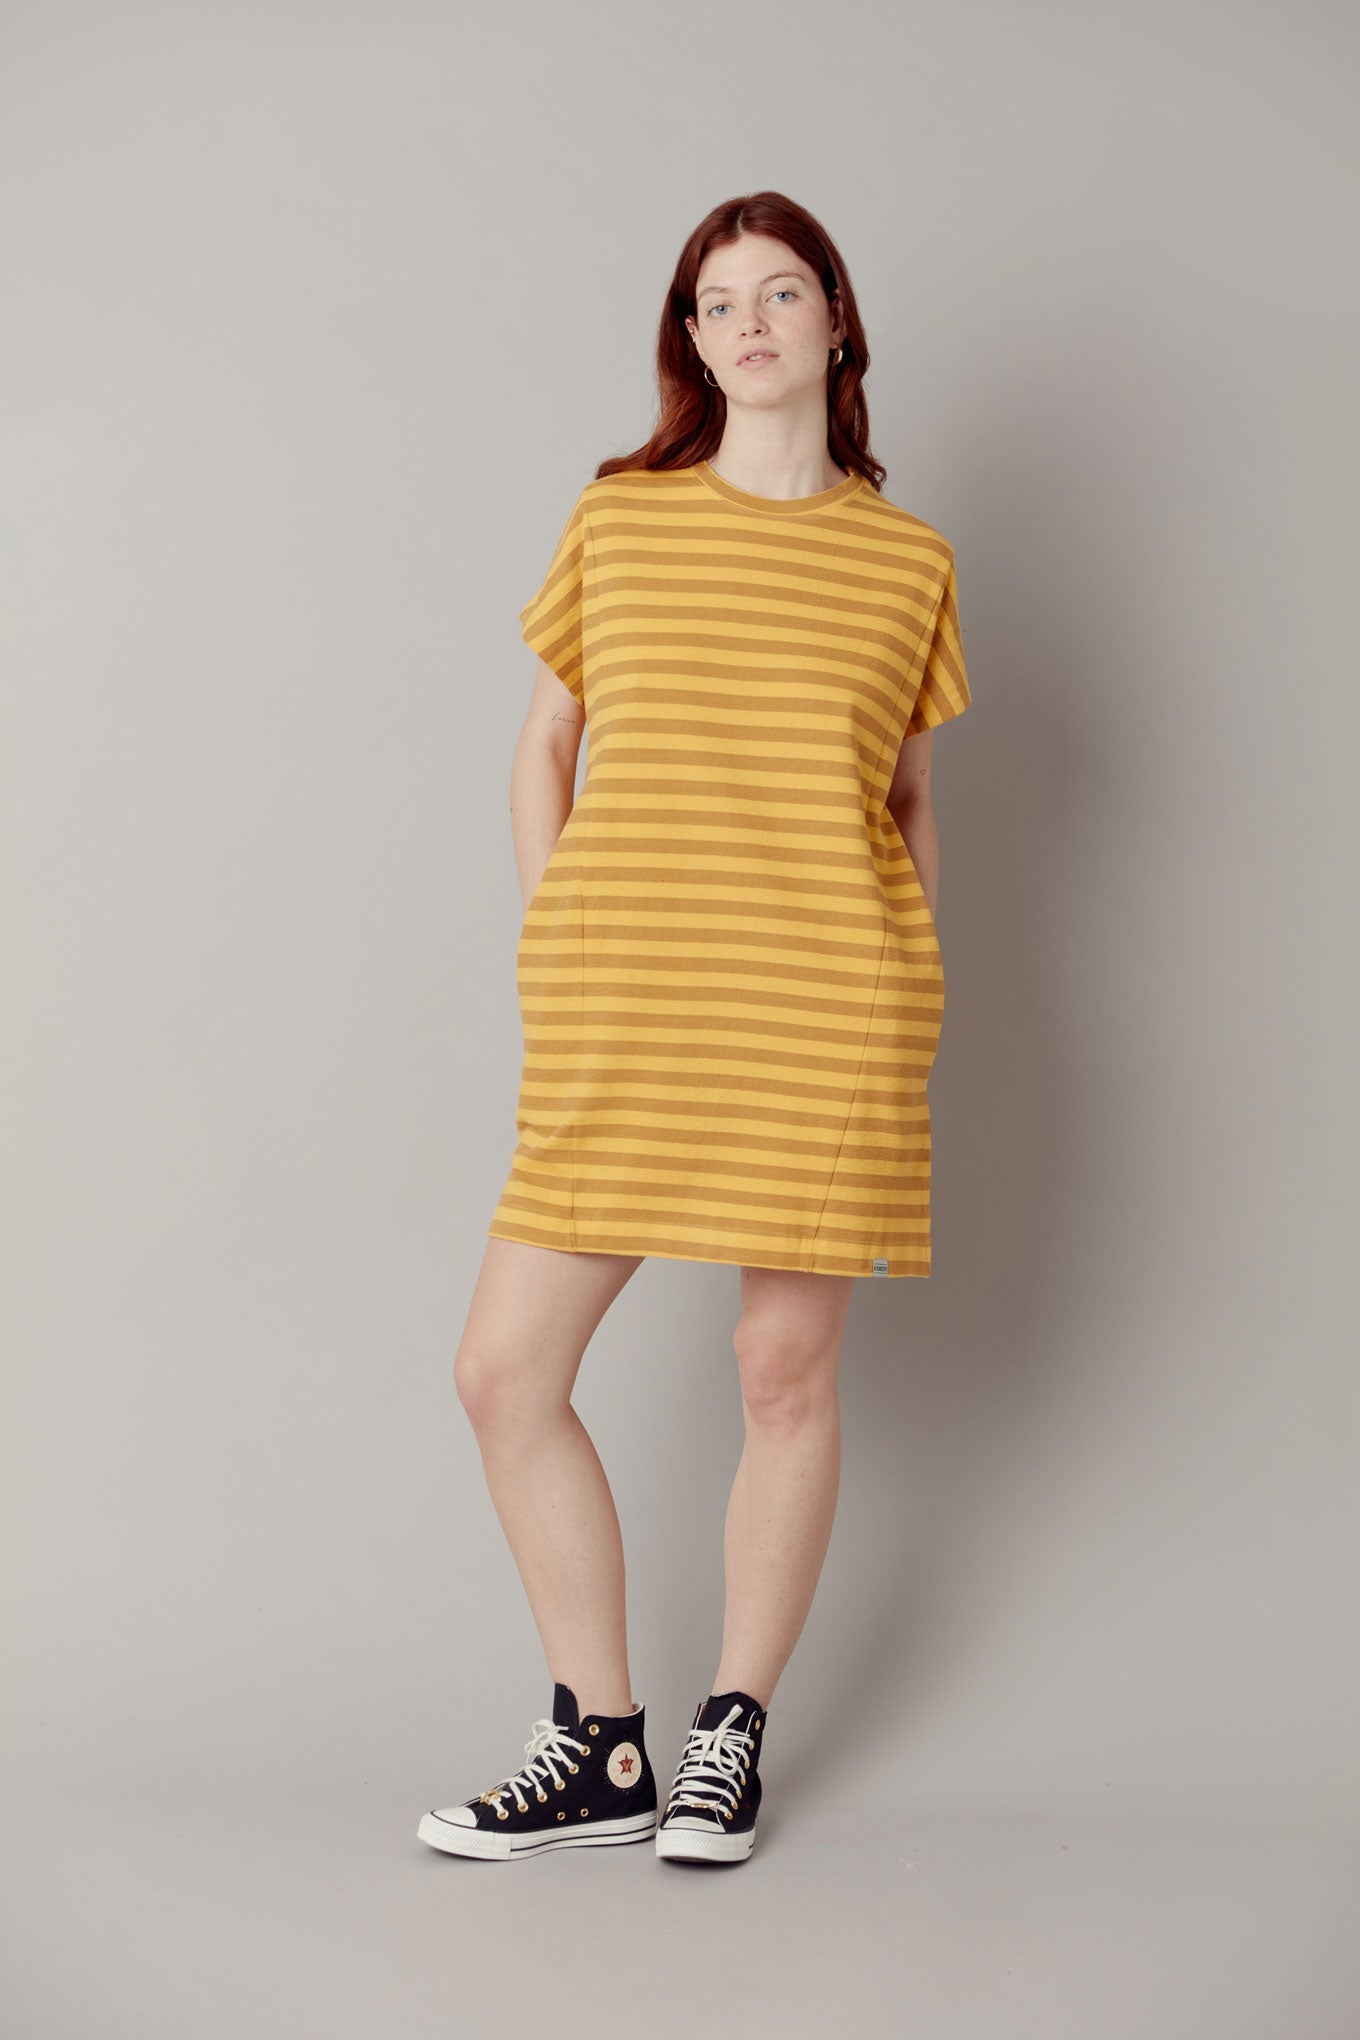 Yellow striped organic cotton short sleeve dress from Komodo